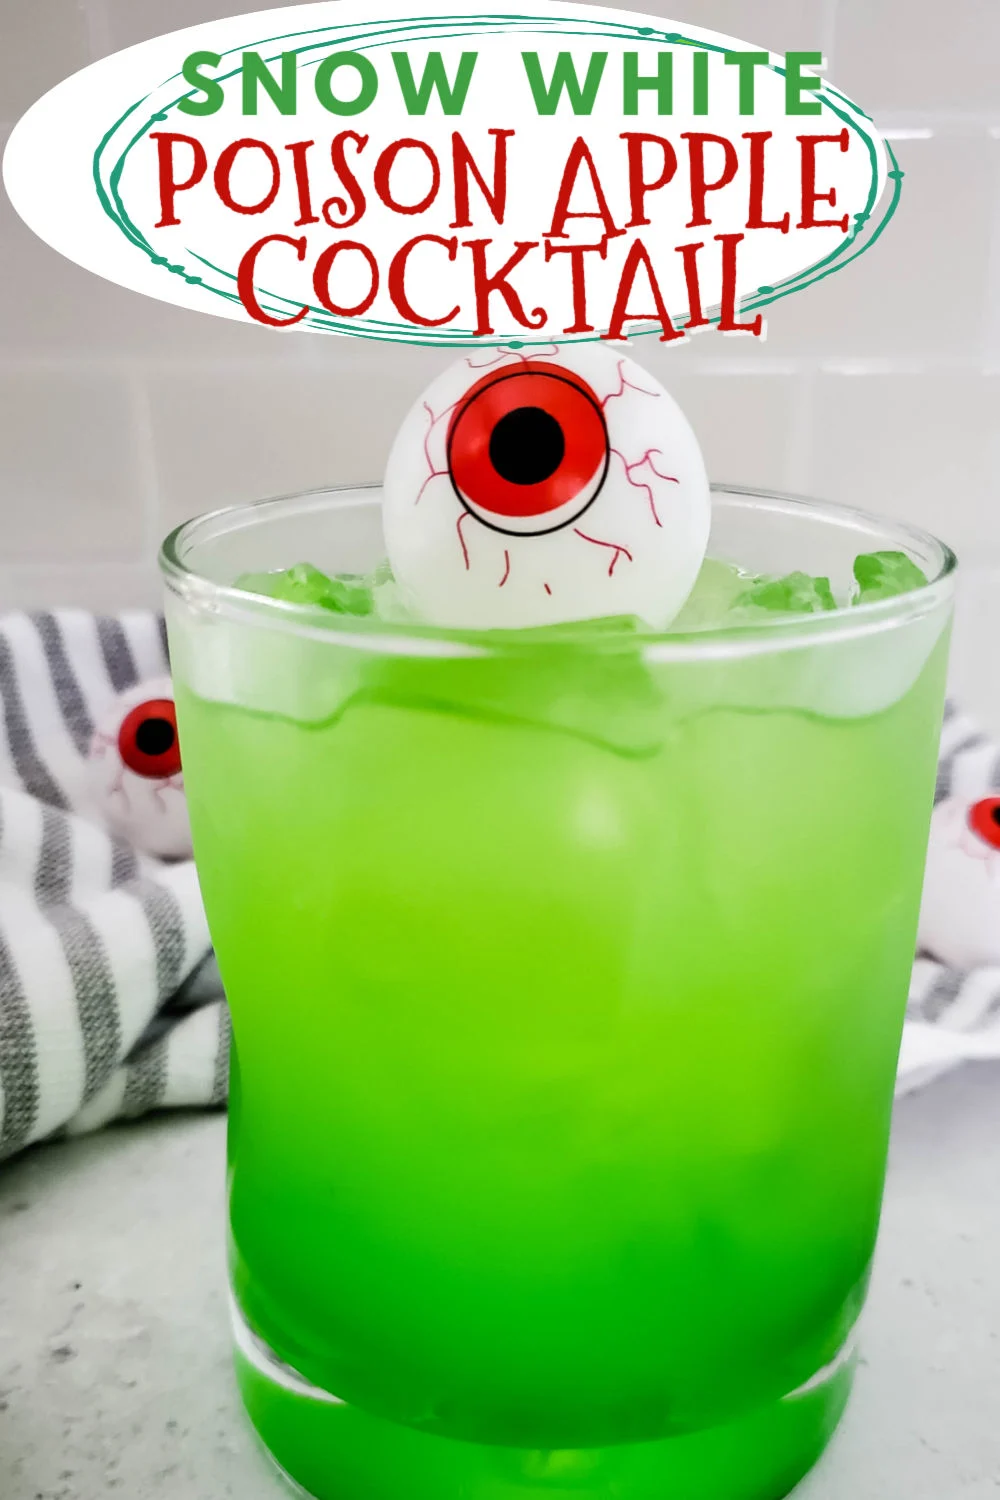 Poison apple cocktail